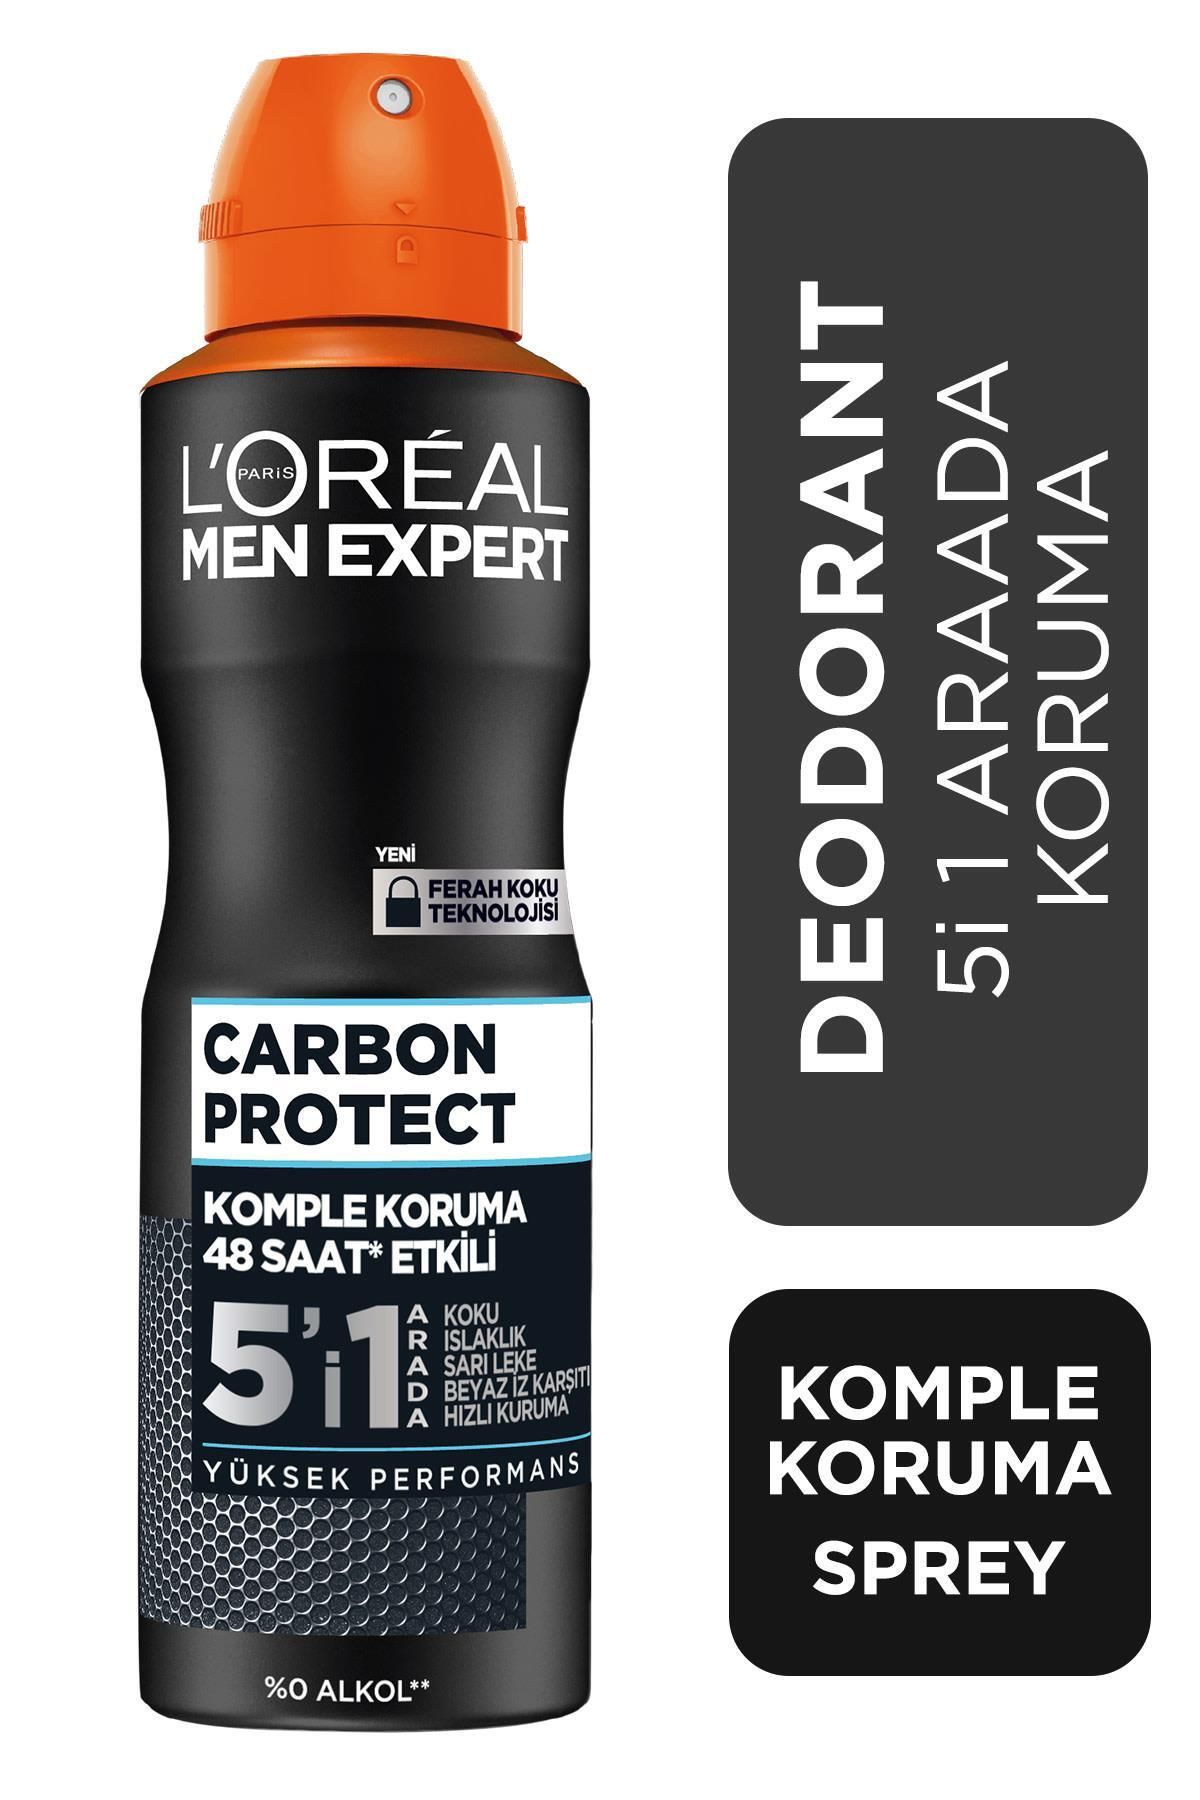 L'Oreal Paris Men Expert Carbon Protect Anti Perspirant 5'i 1 Arada Erkek Sprey Deodorant 150ml